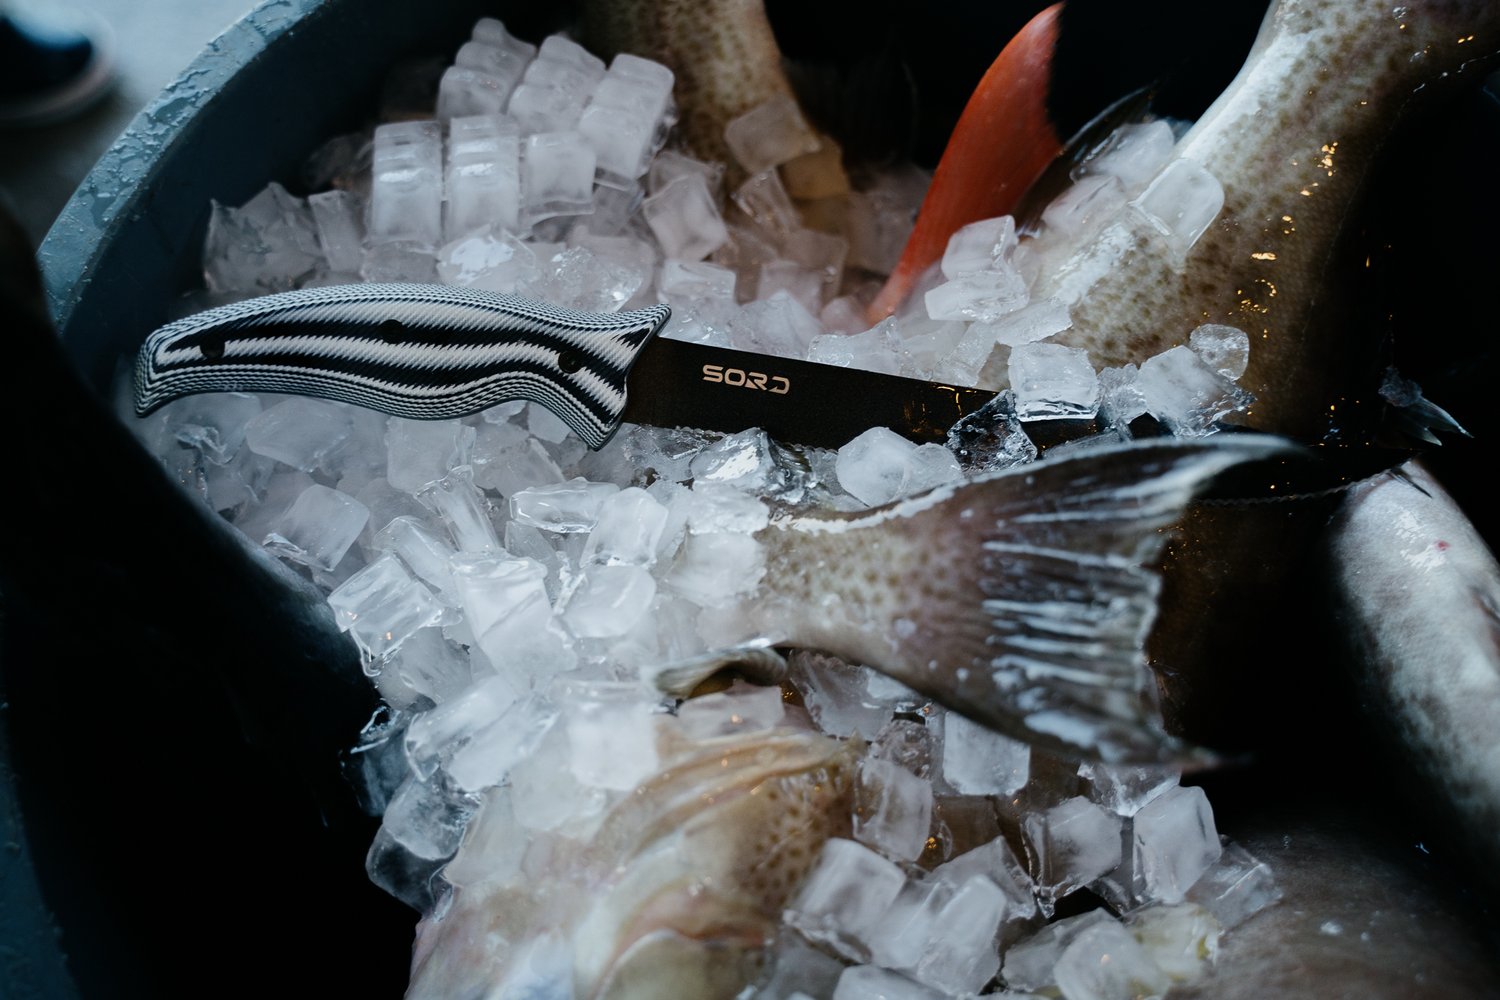 9 Serrated Fish Fillet Knife